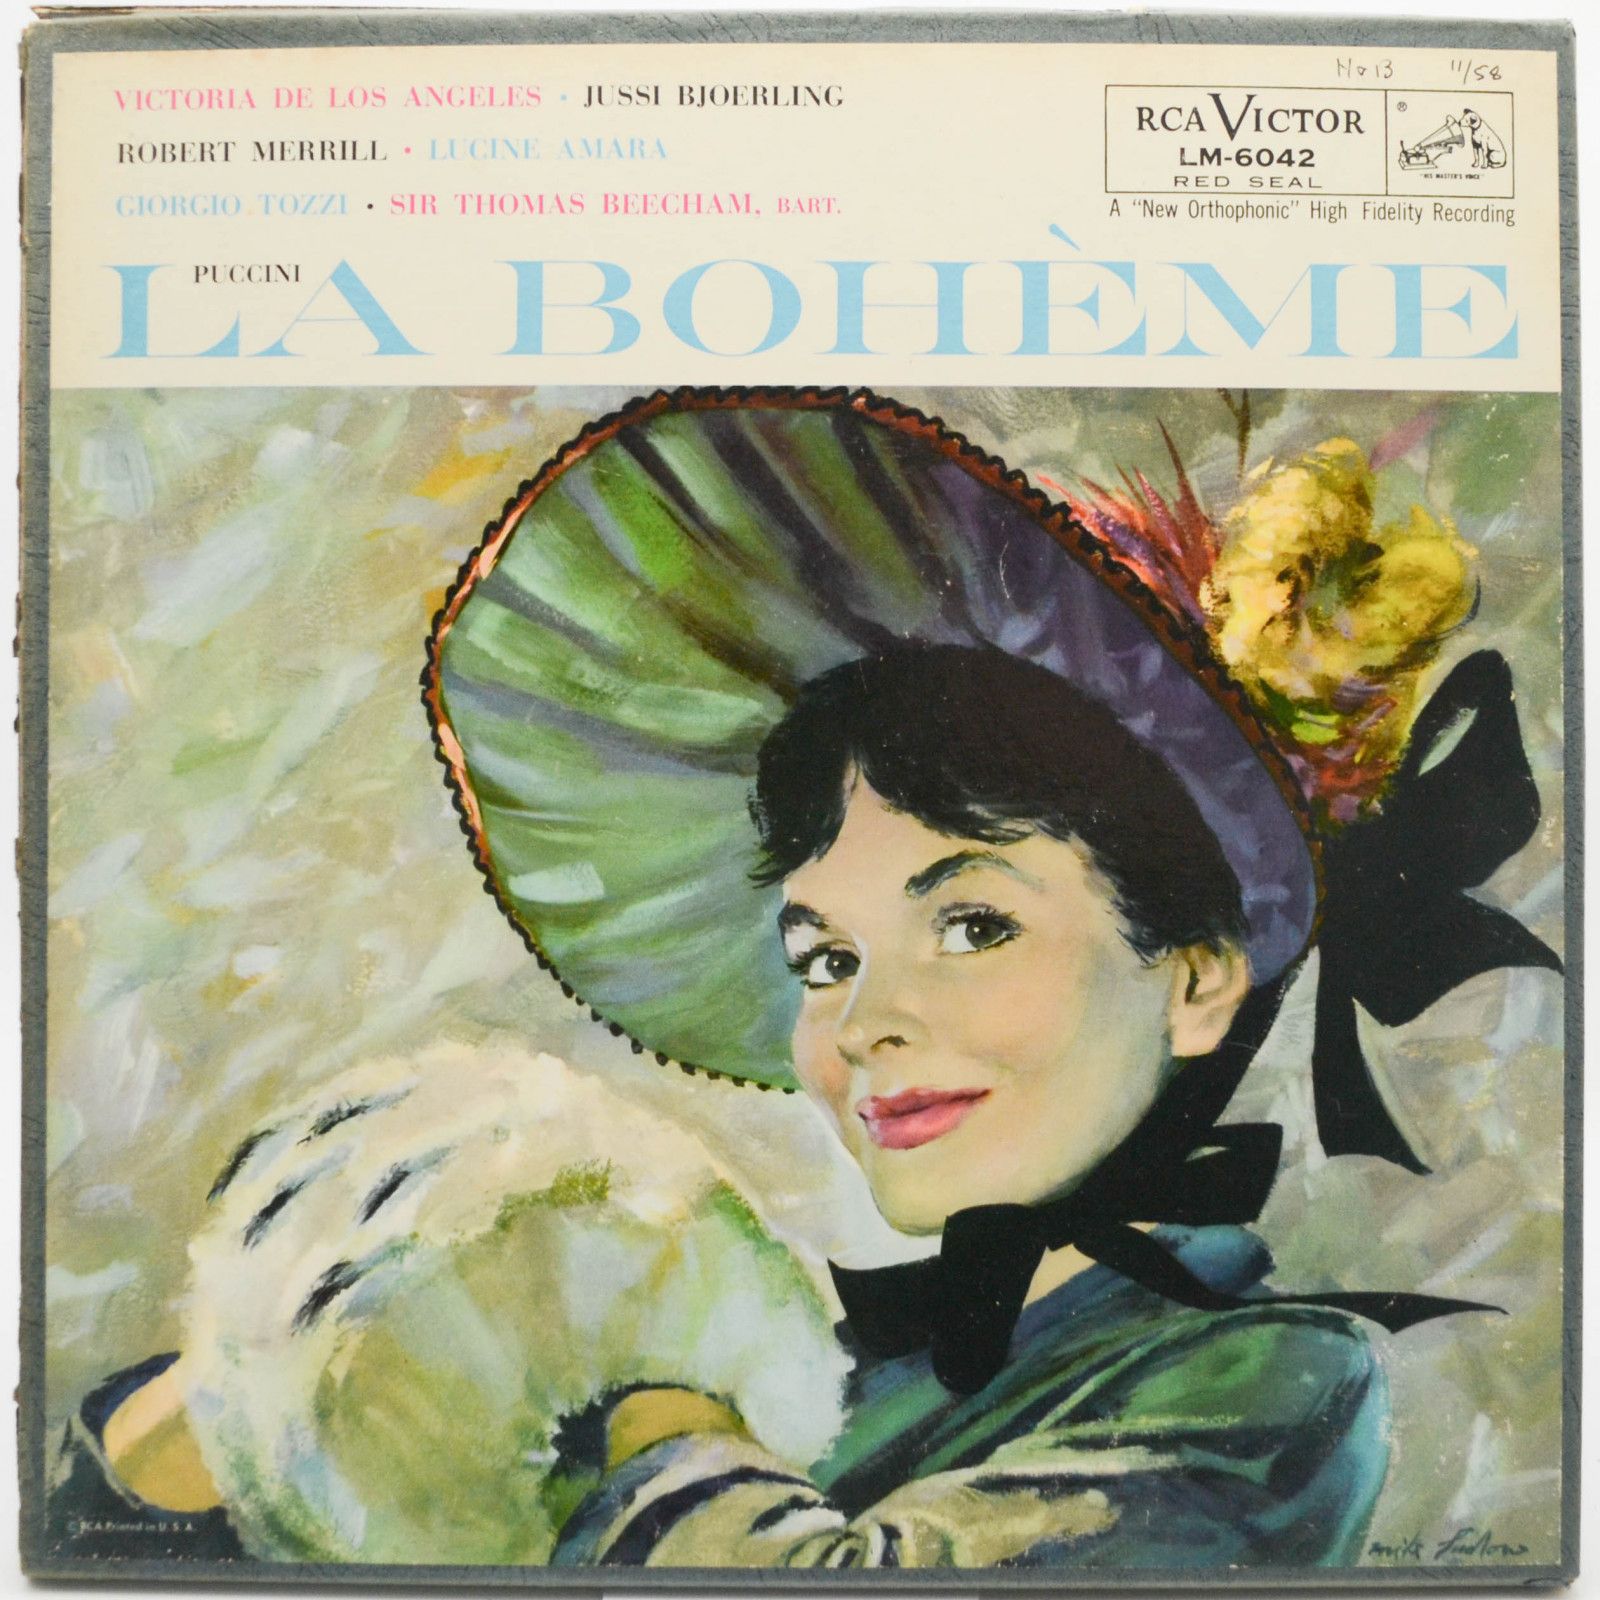 Puccini, Victoria De Los Angeles, Jussi Bjoerling, Robert Merrill, Lucine Amara, Giorgio Tozzi, Sir Thomas Beecham, Bart. — La Bohème (USA, Box-set, booklet), 1956